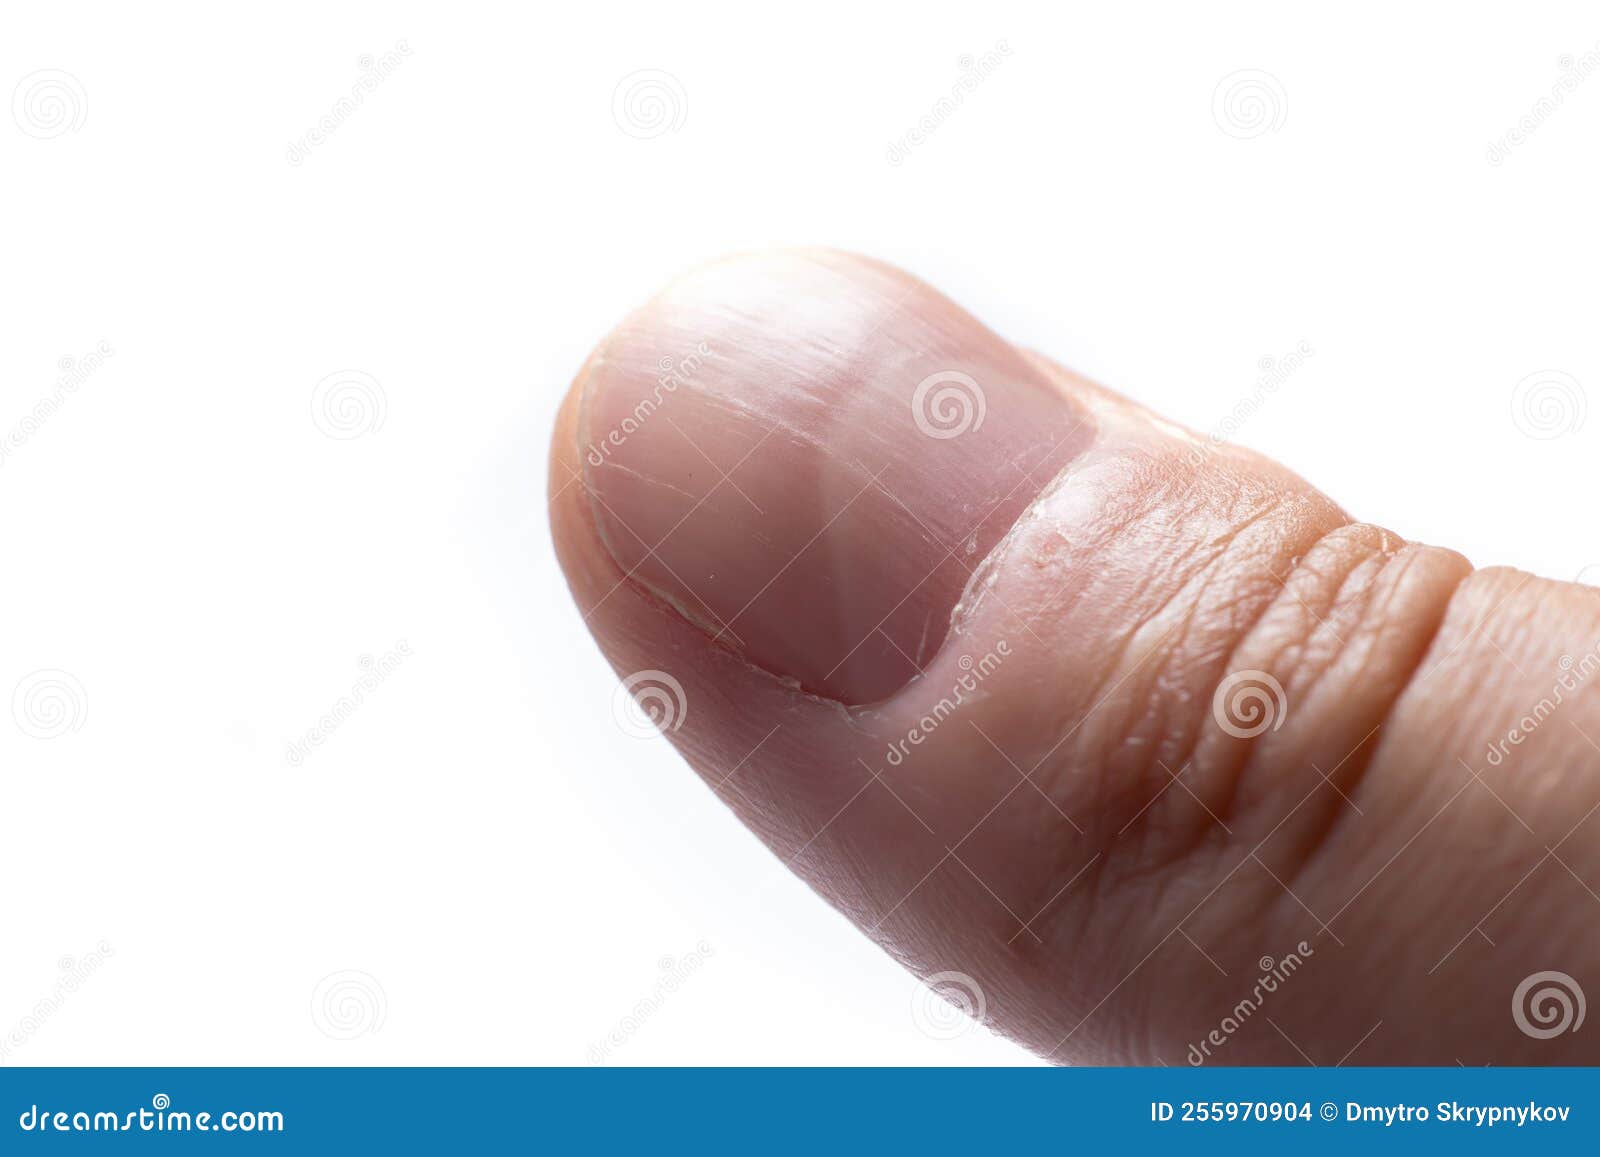 Long nails on right hand with no nail polish | My super long… | Flickr